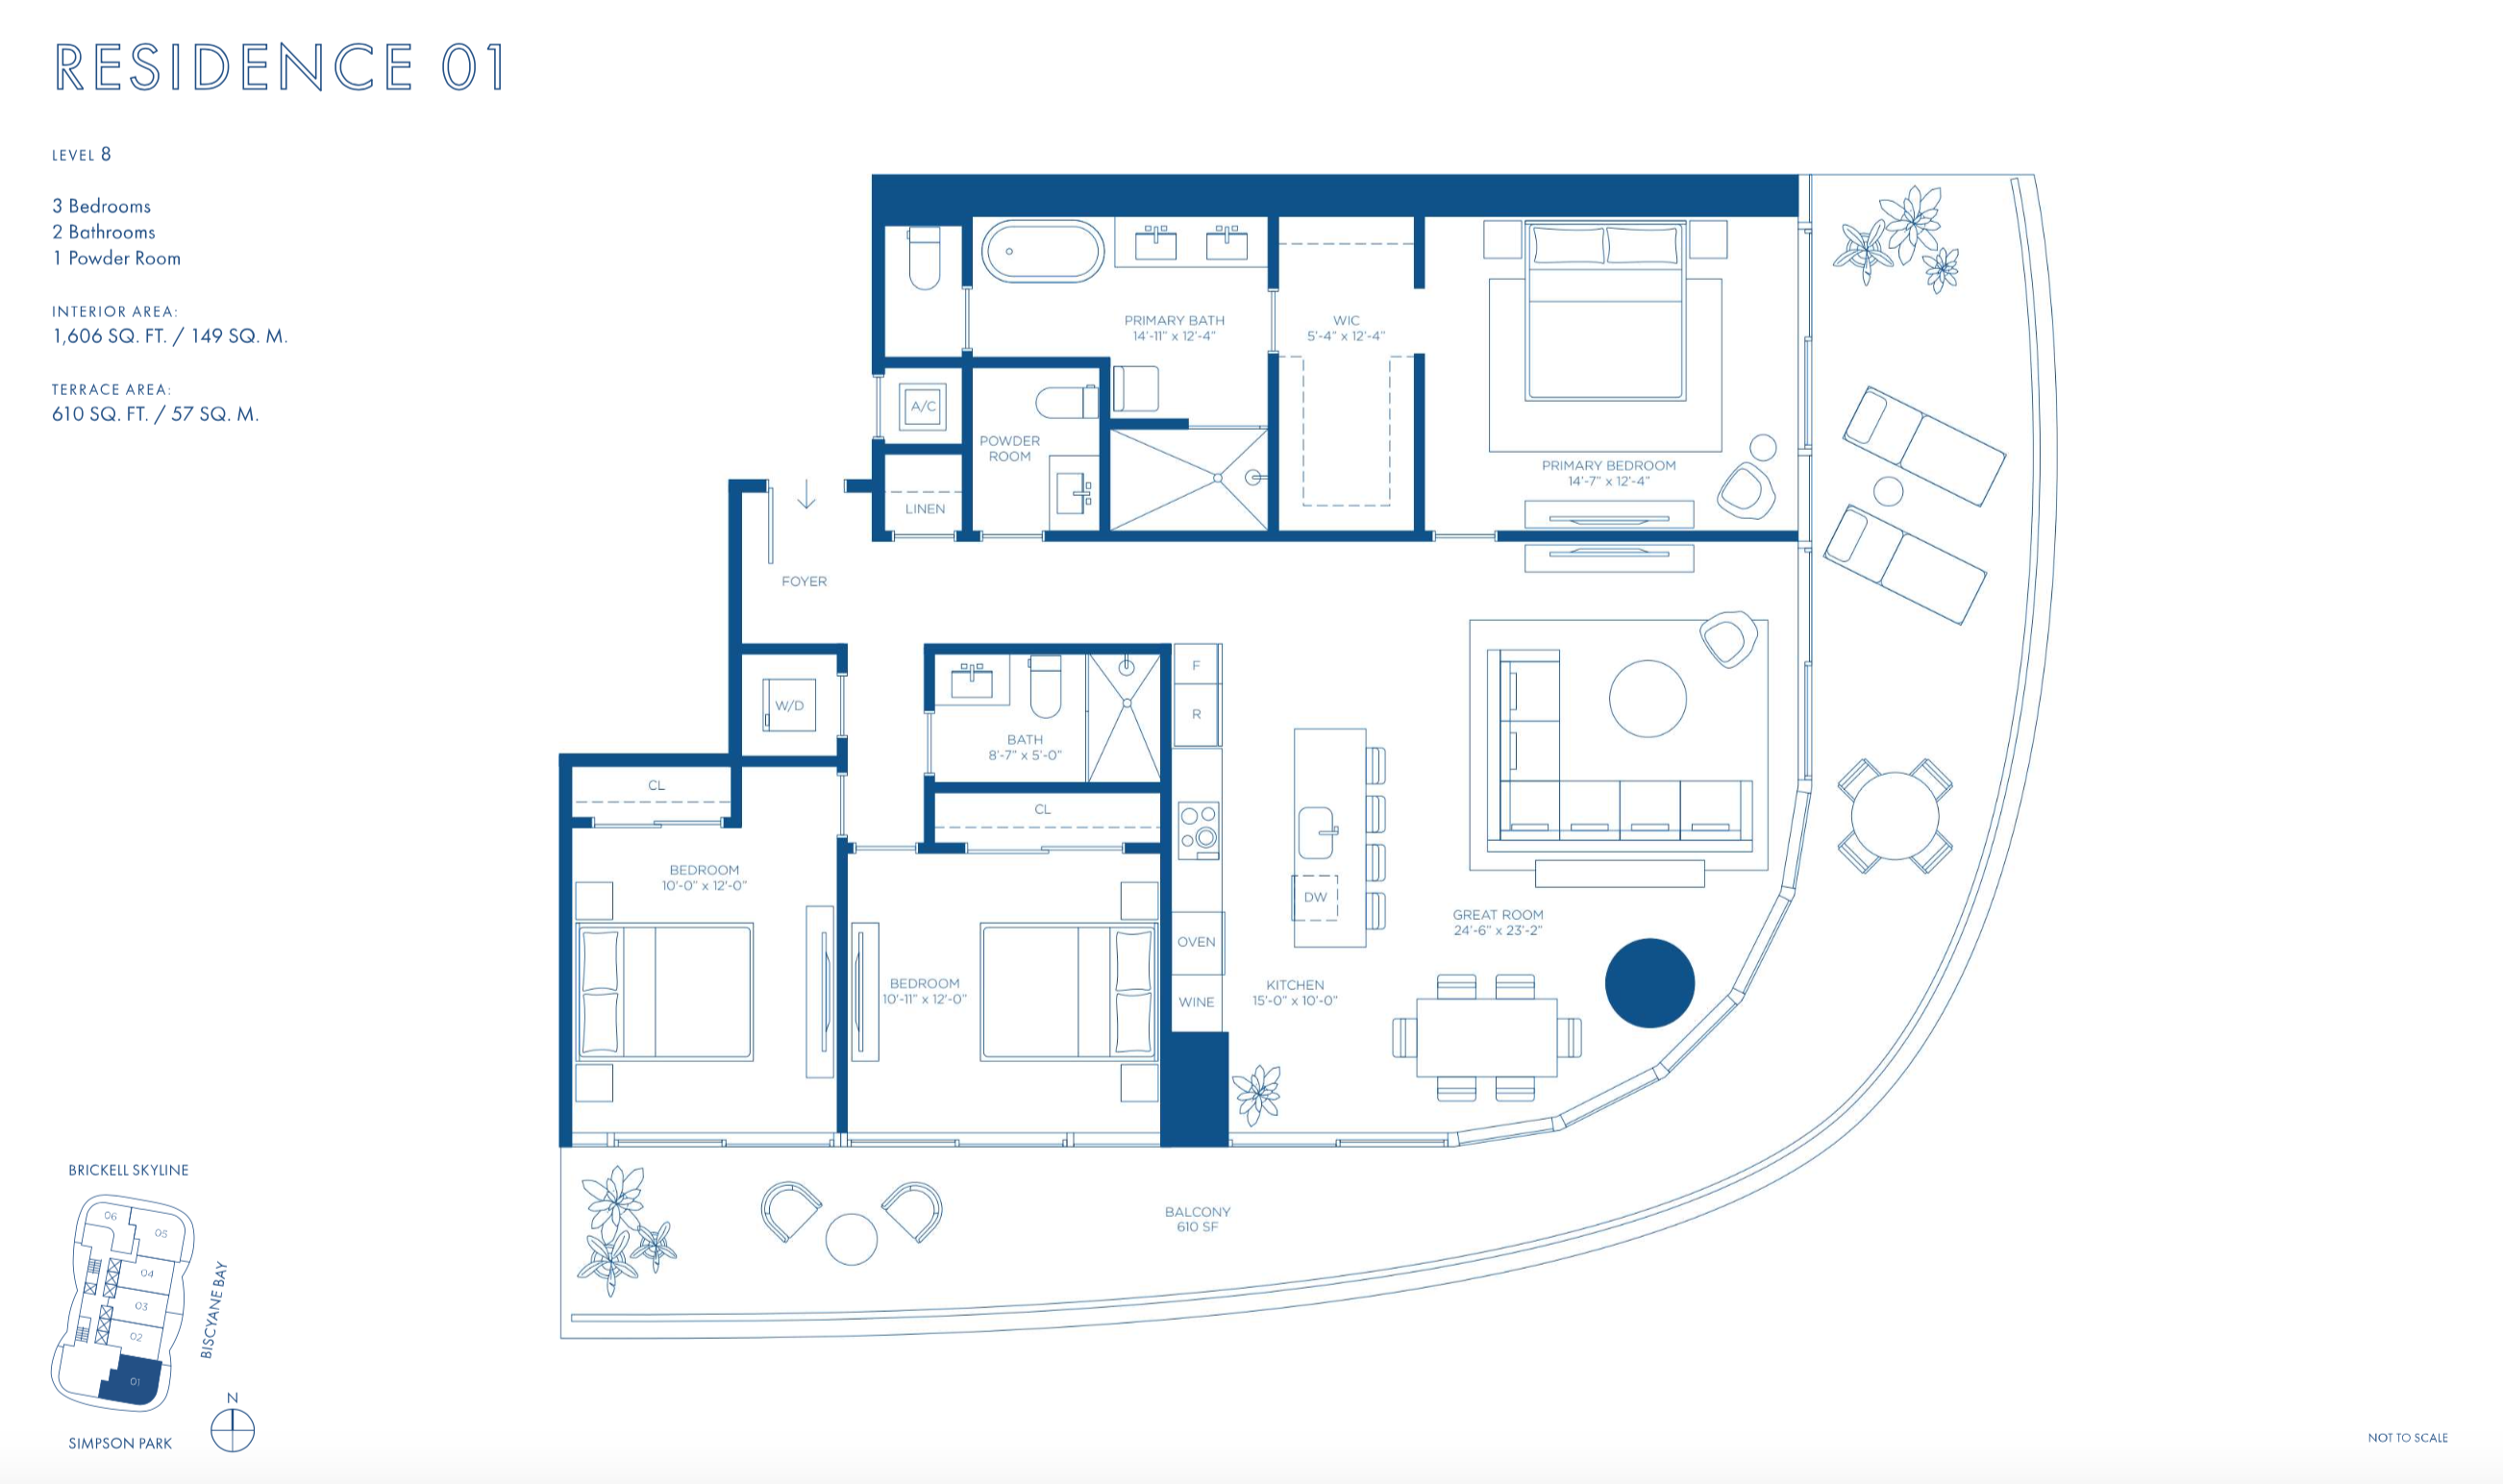 Cipriani Residences Brickell | Residence 01 | Floor 8 | 3 Be/2.5 Ba | 1,606 SF